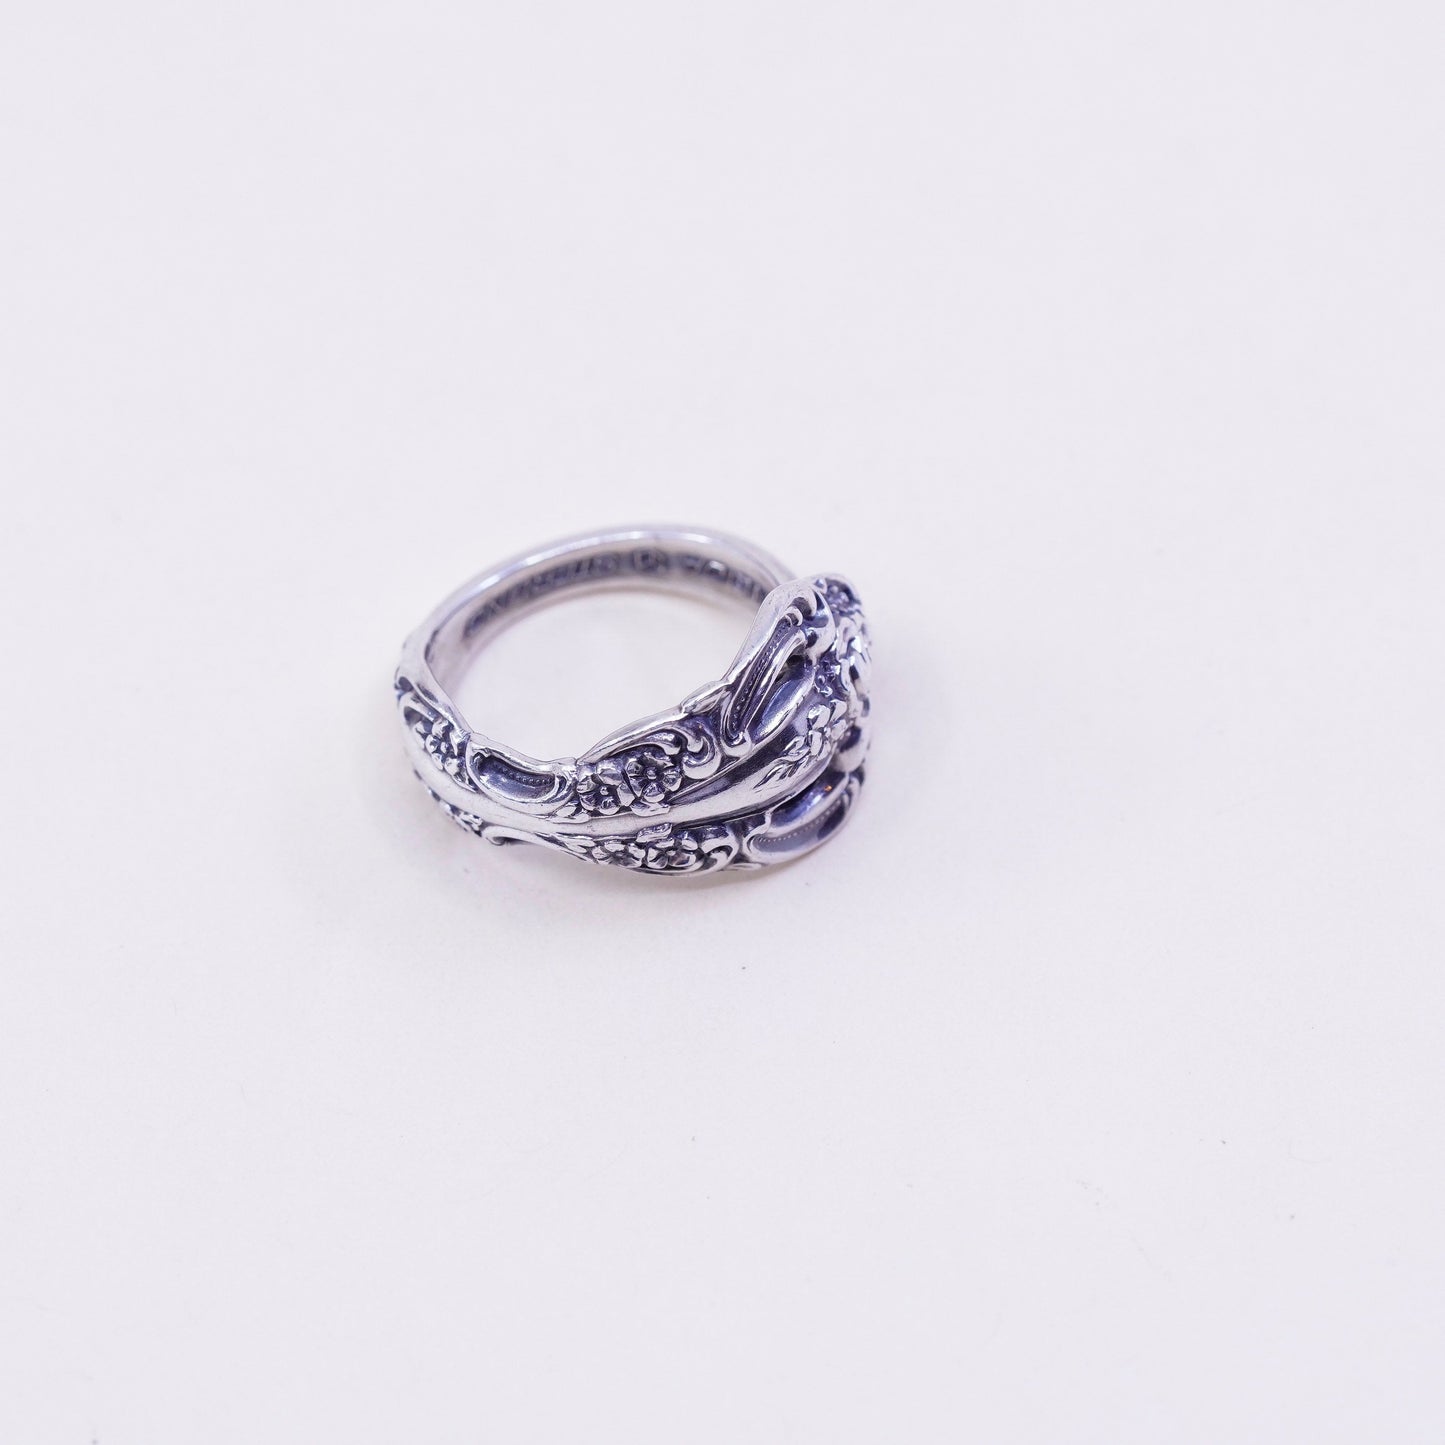 Size 7.25, Vintage Oneida Sterling 925 silver handmade spoon wrap ring flower